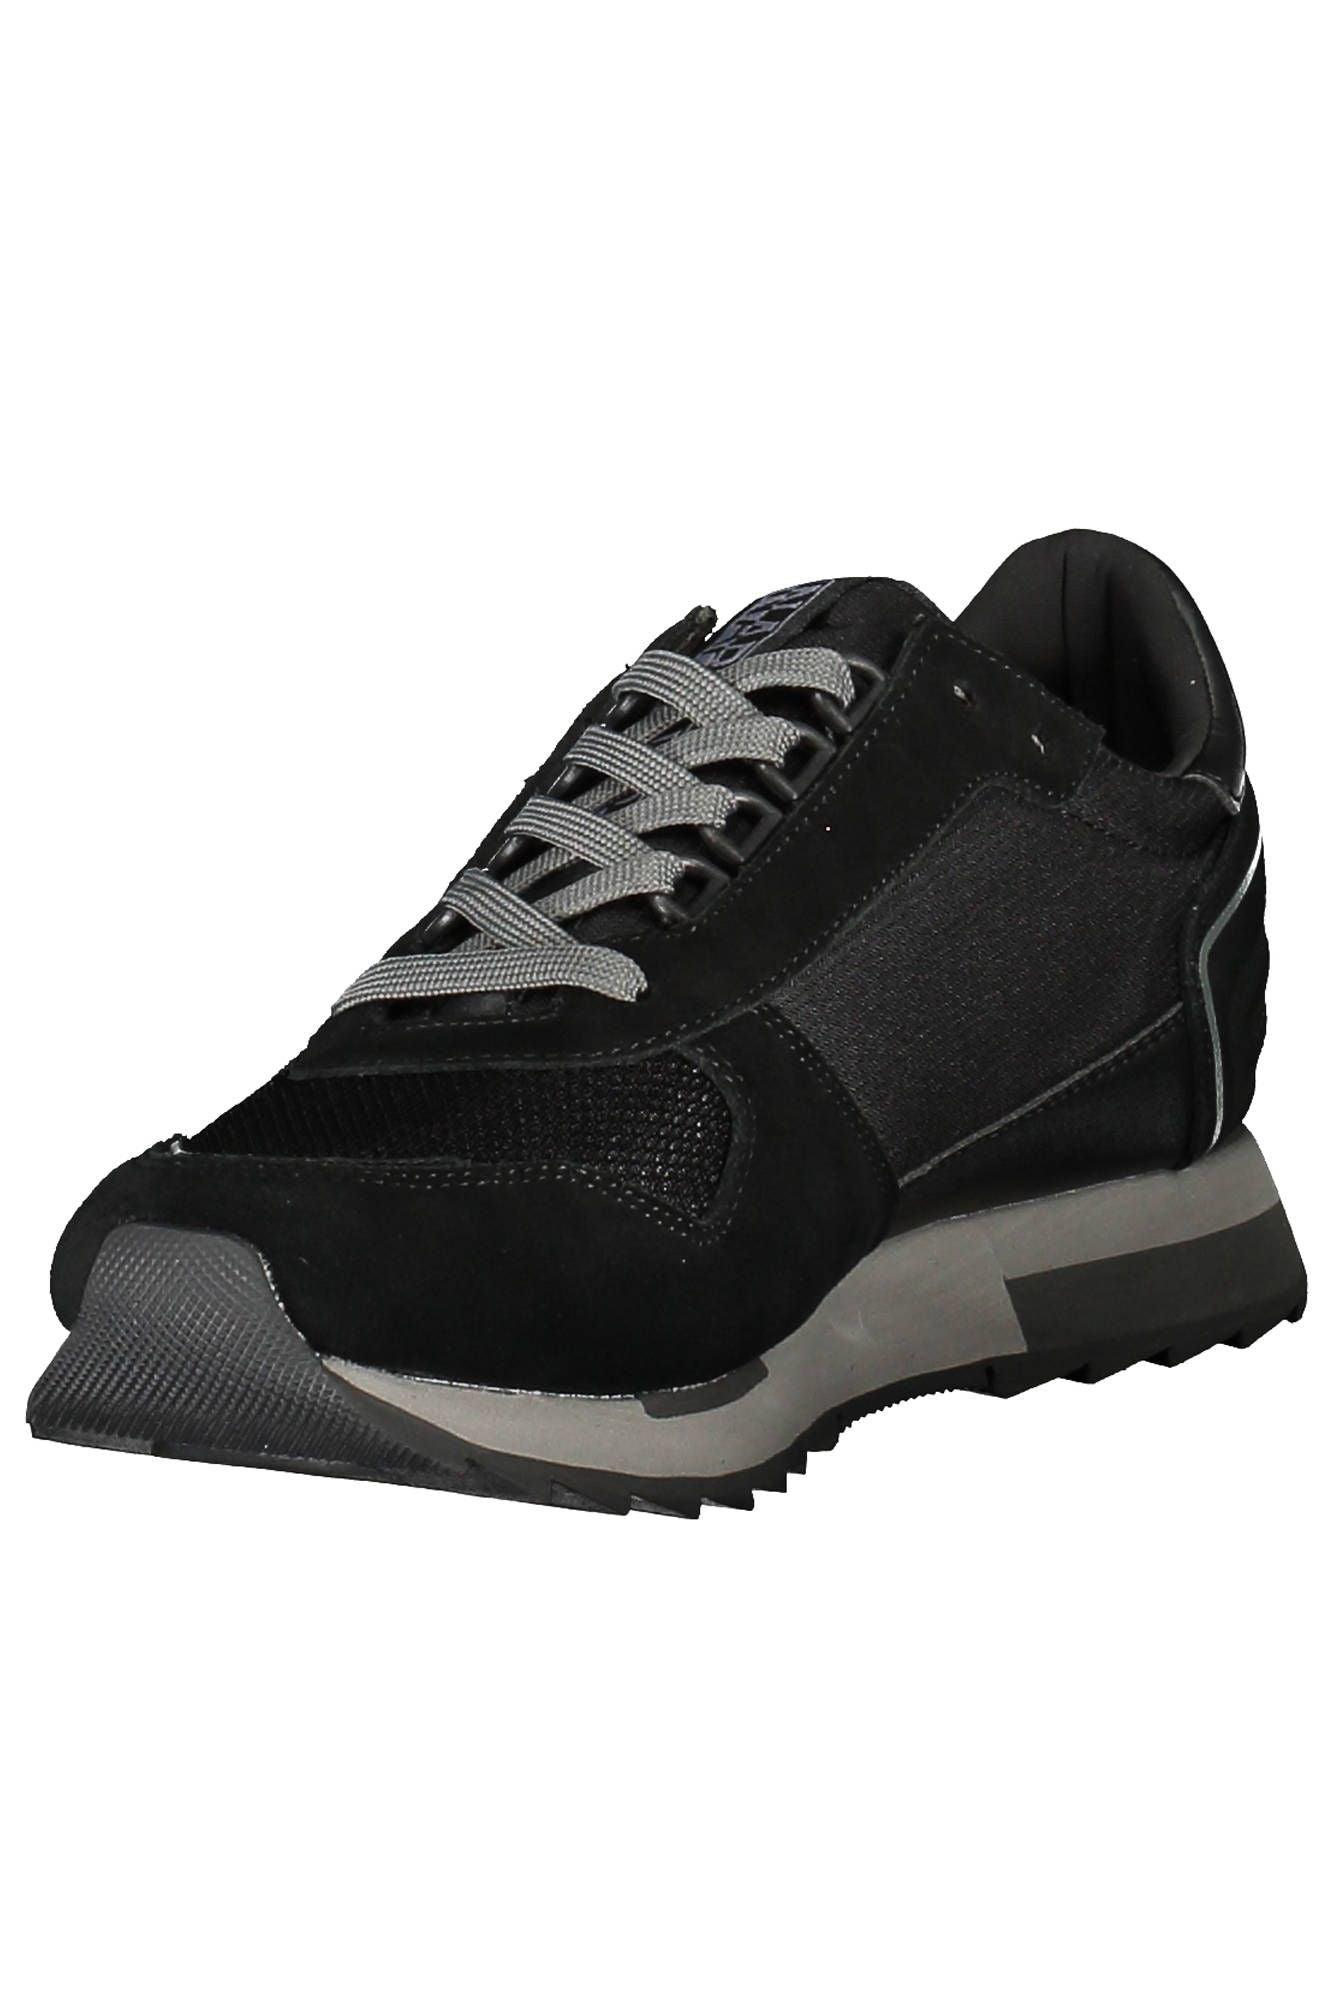 Napapijri Sleek Black Lace-Up Sneakers with Contrasting Details - PER.FASHION